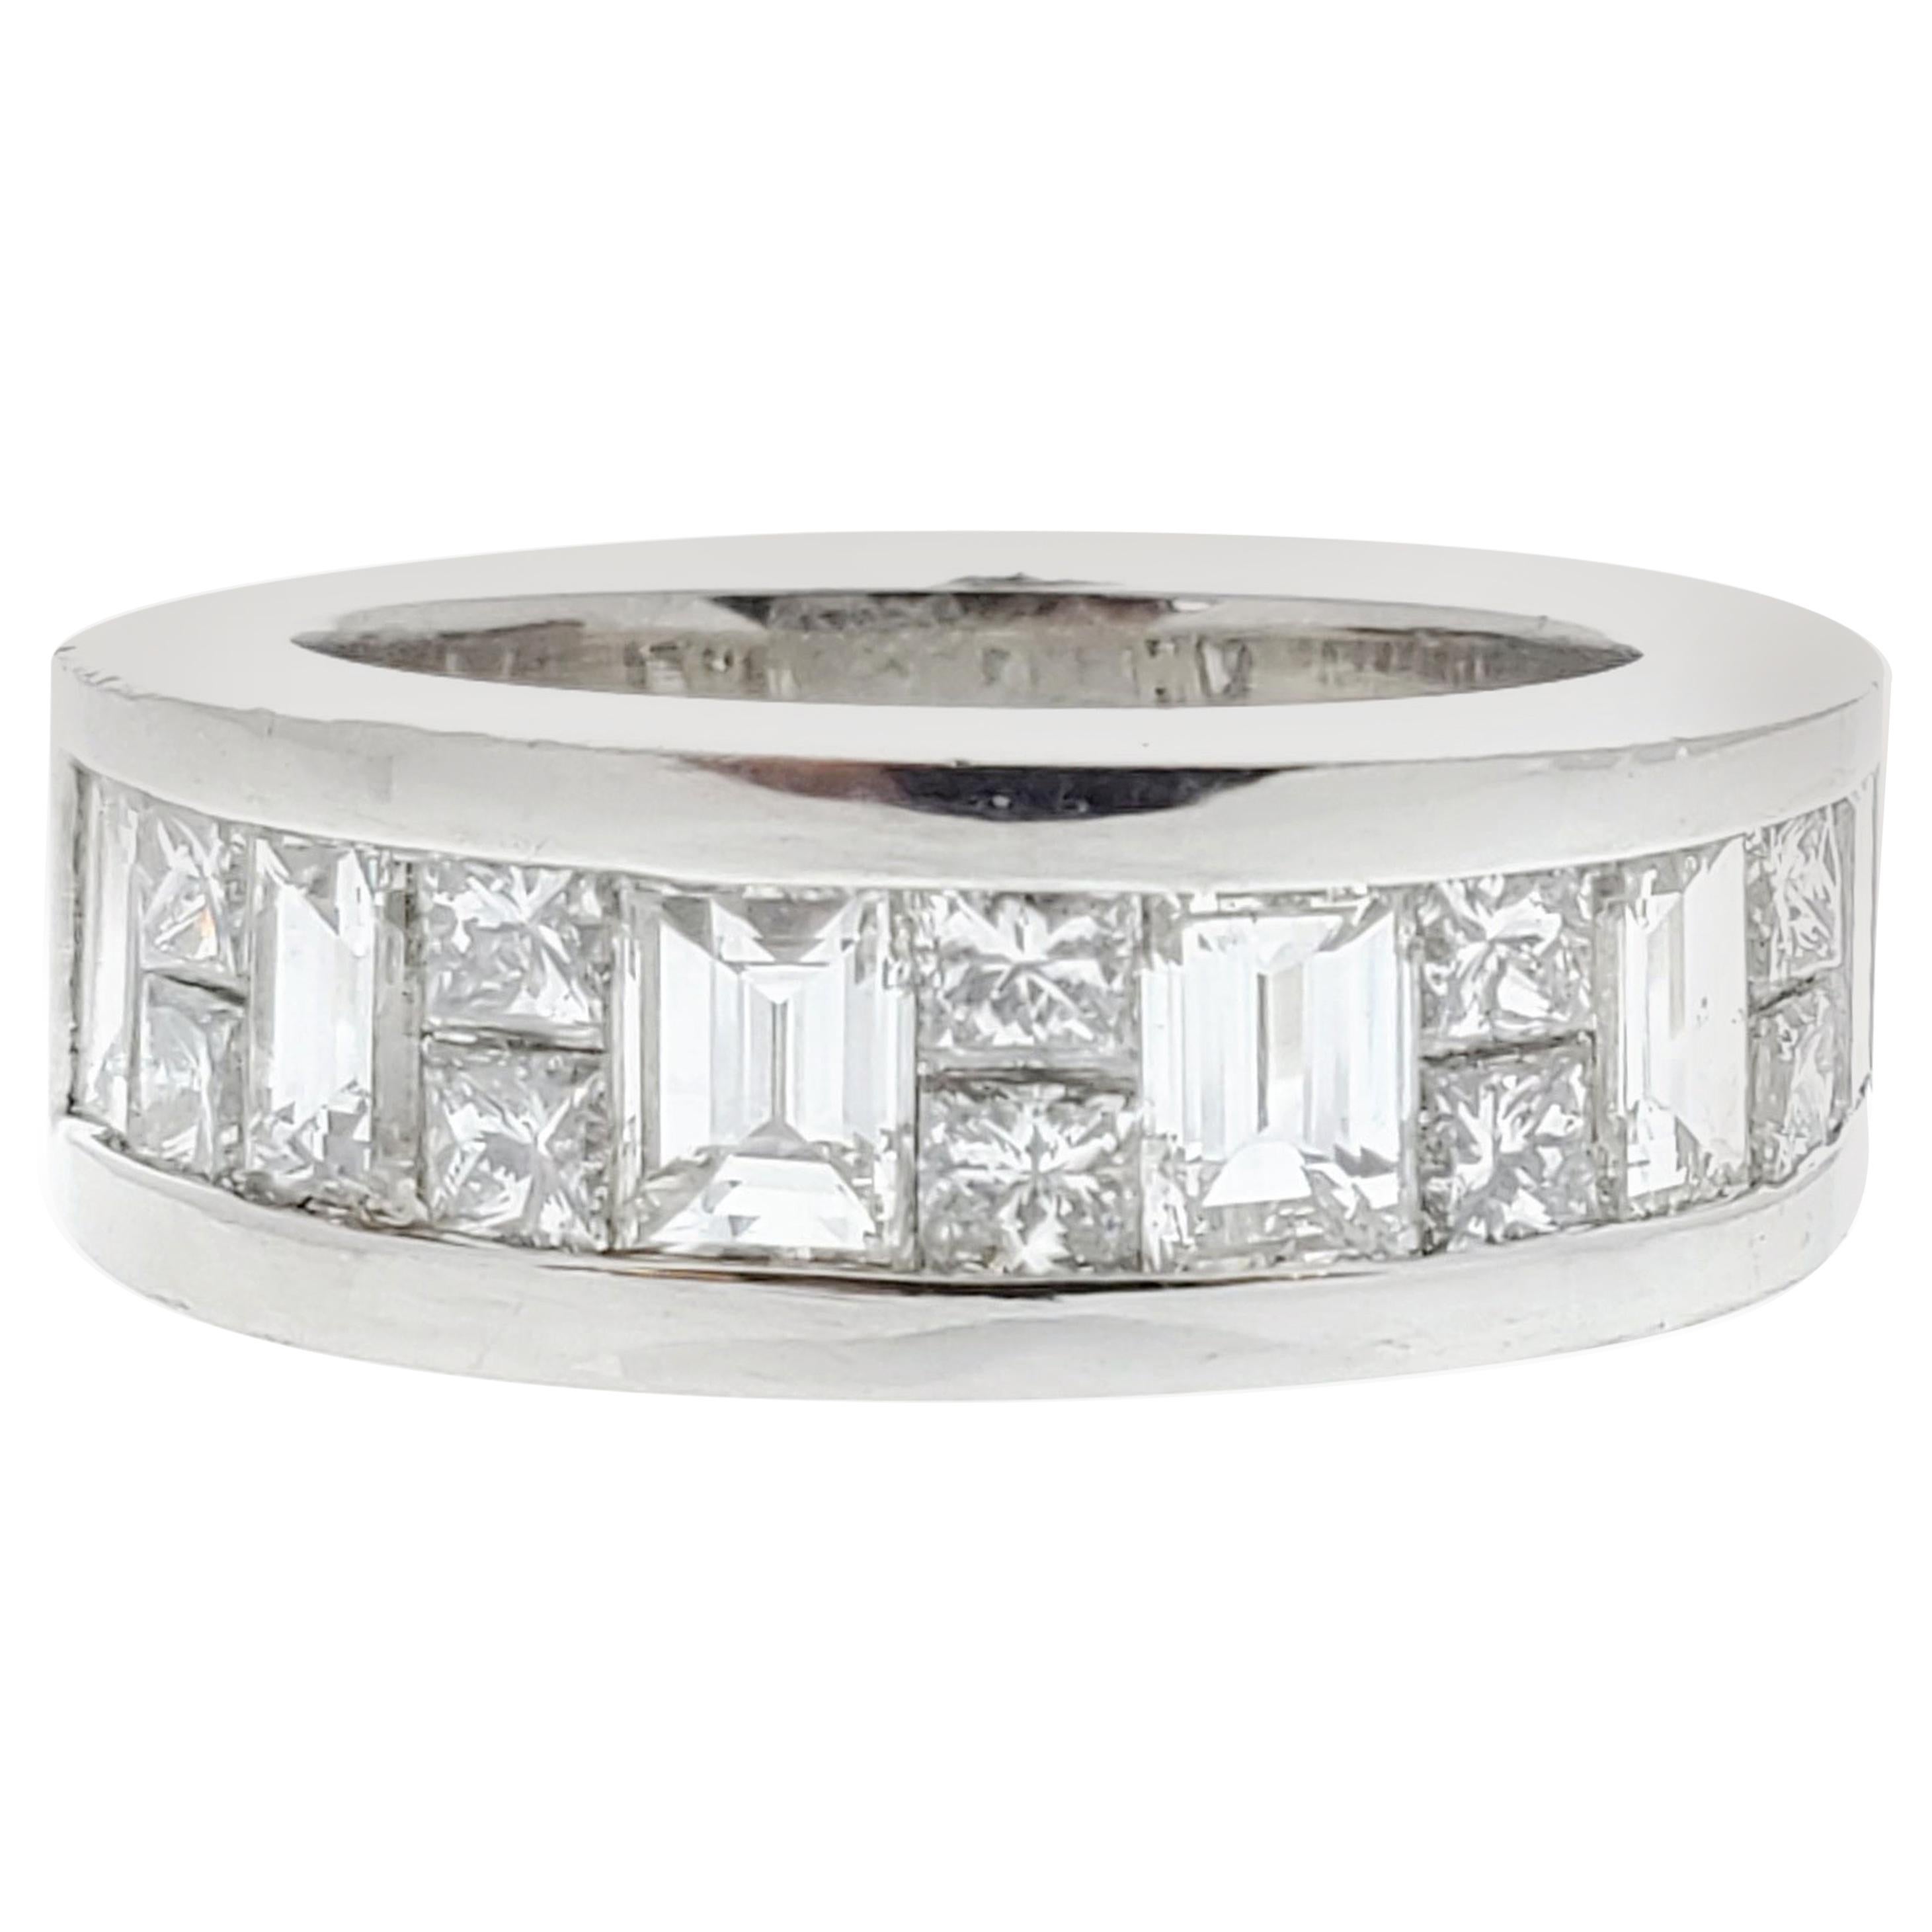 2.27 Carat Princess Cut and Baguette White Diamond Ring in Platinum